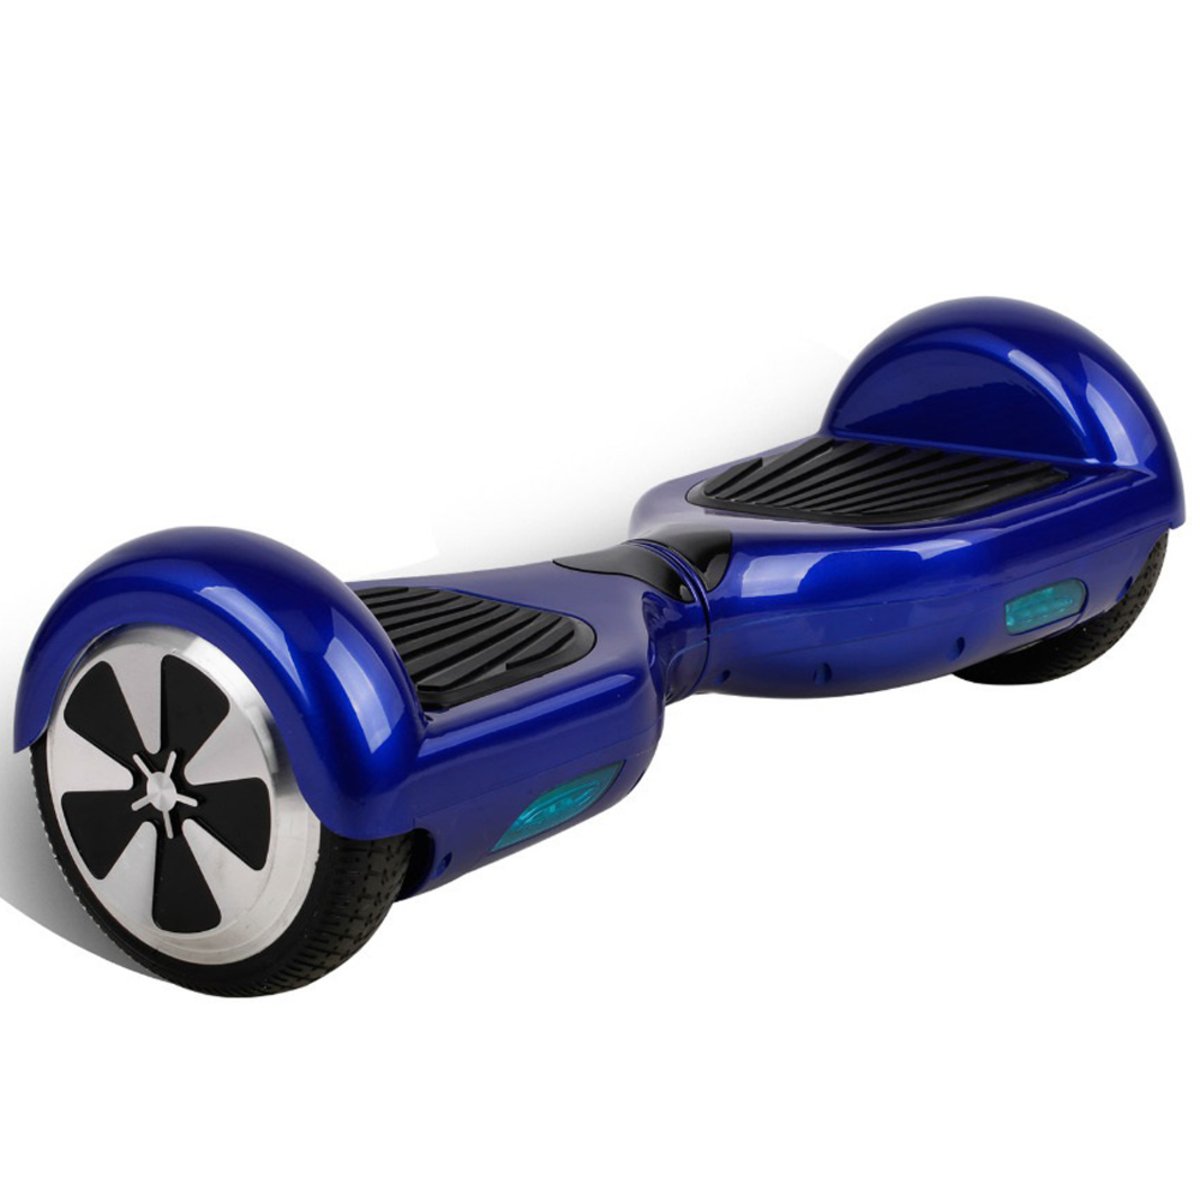 Airwheel Self-Balancing Smart Scooter